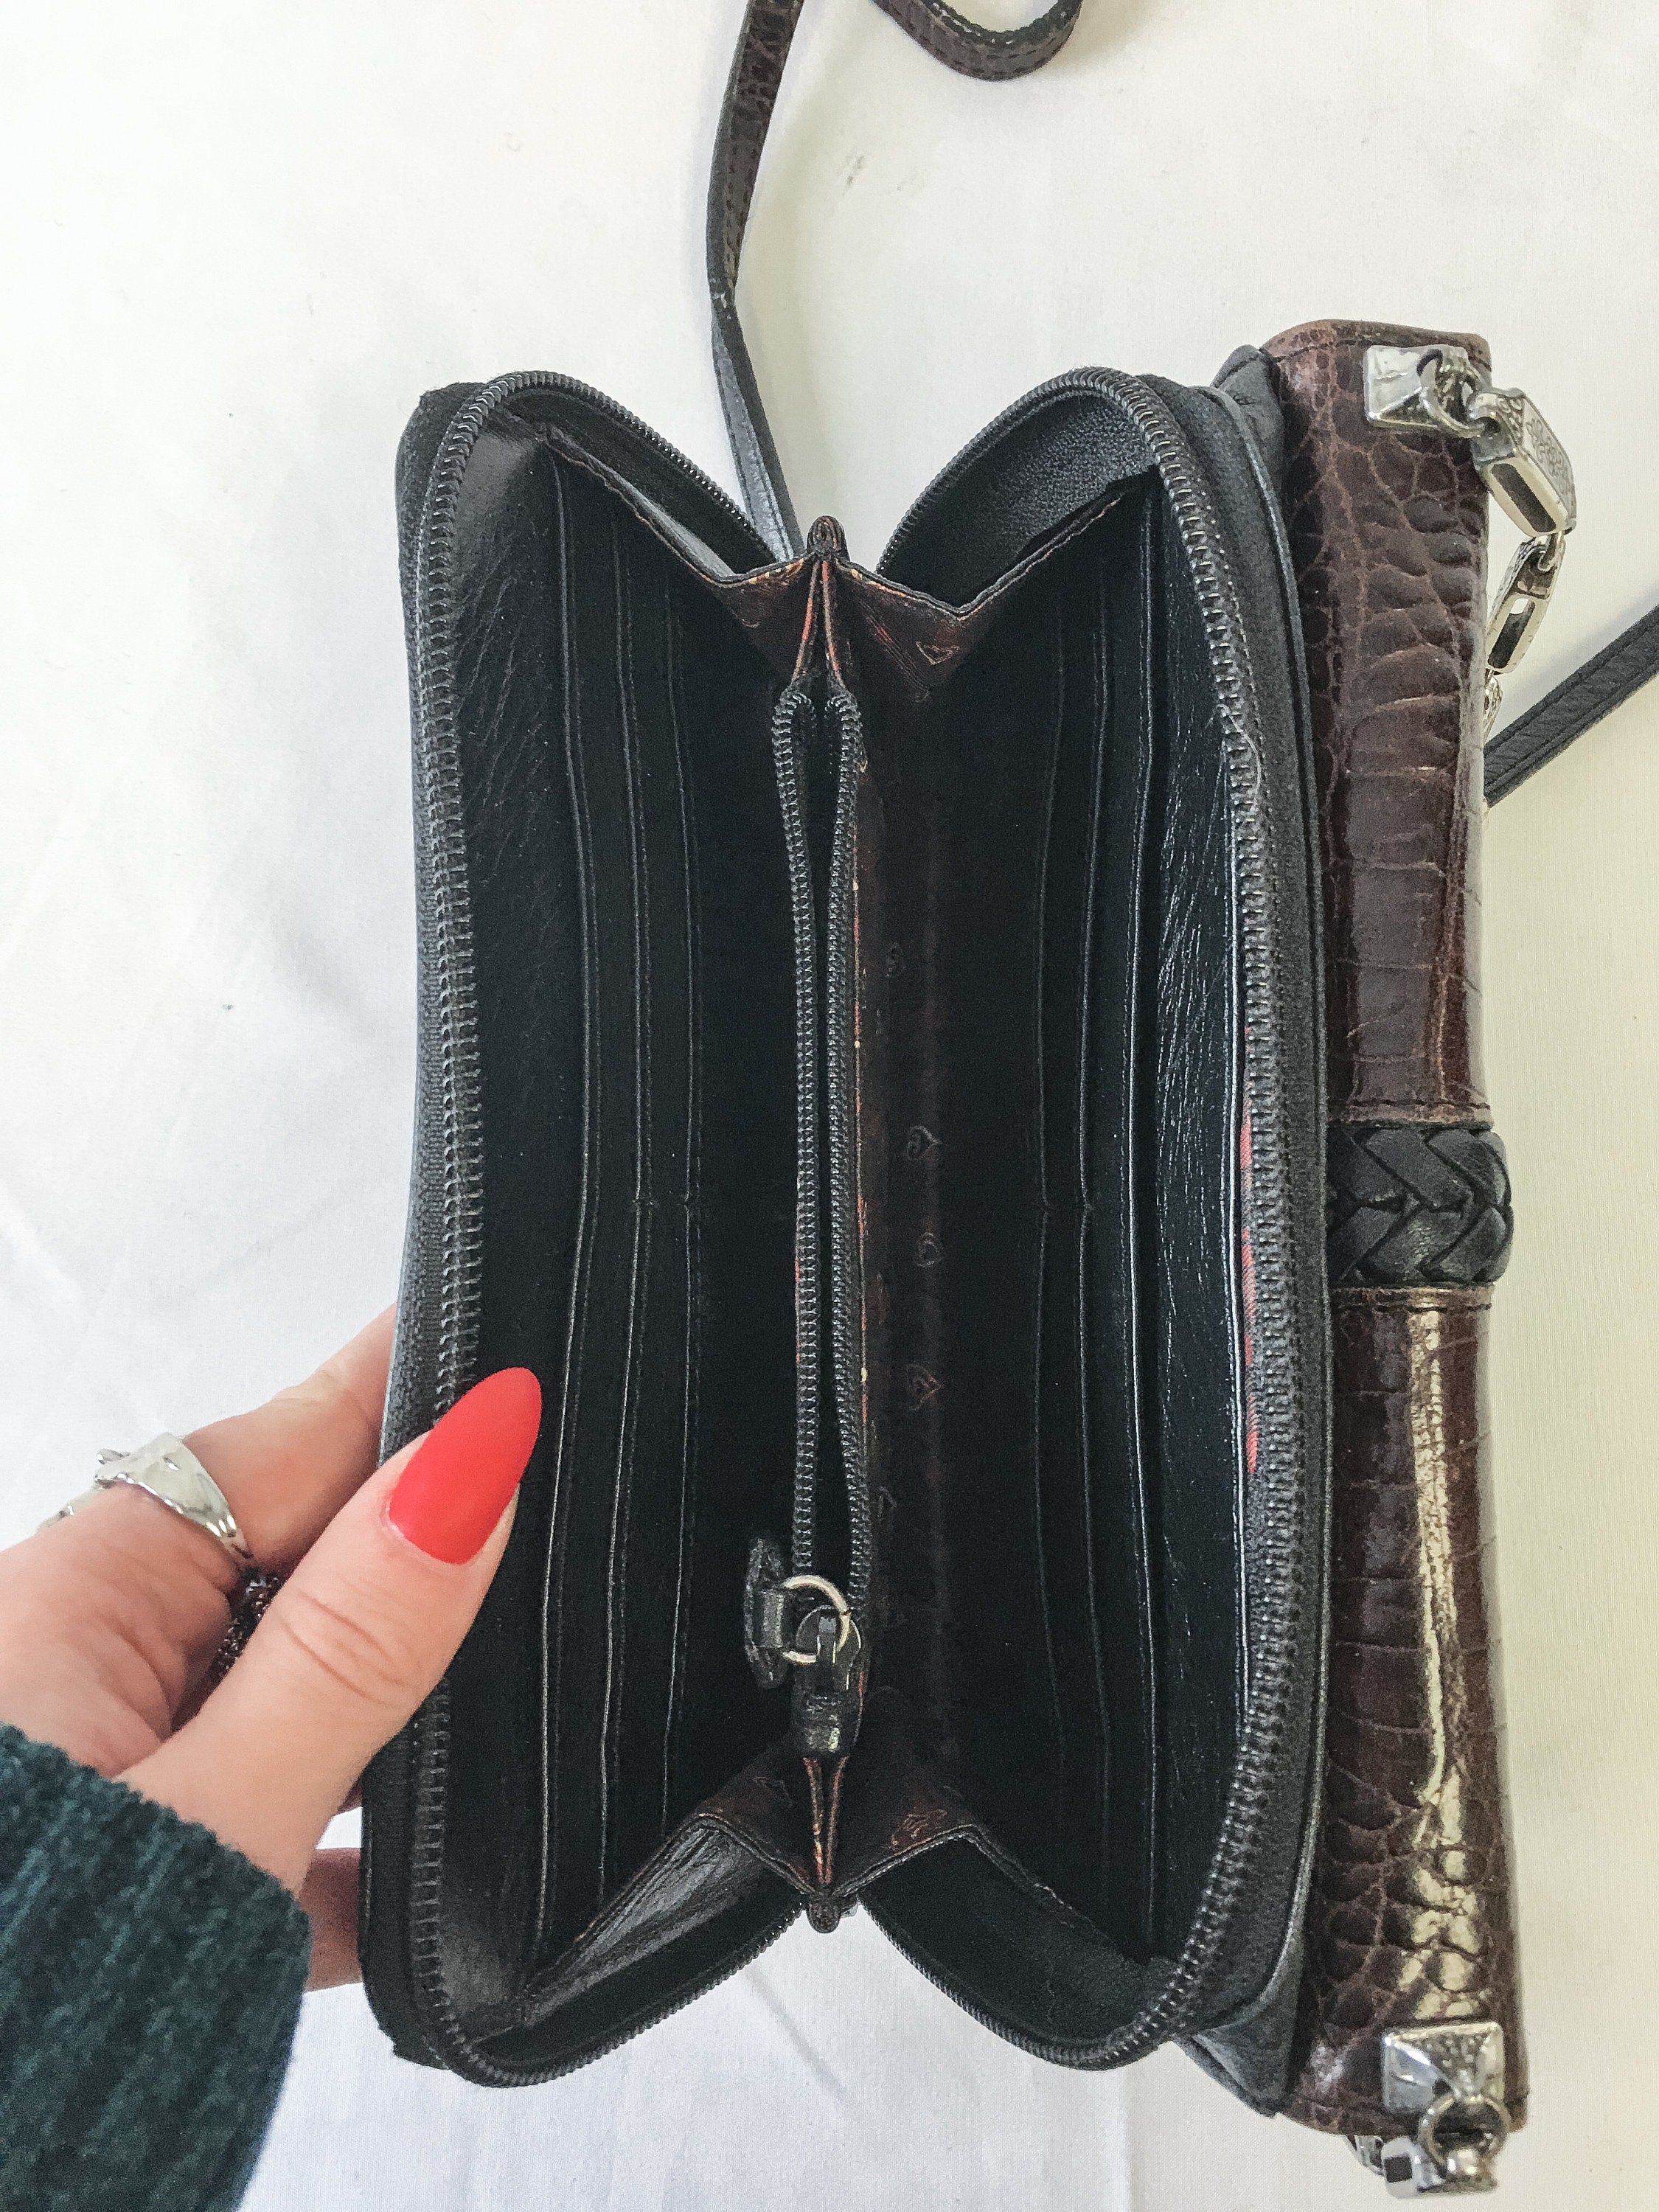 Buy Vintage Brighton Straw Handbag, Red Blue Leather Crossbody Purse Plaid  Online in India - Etsy